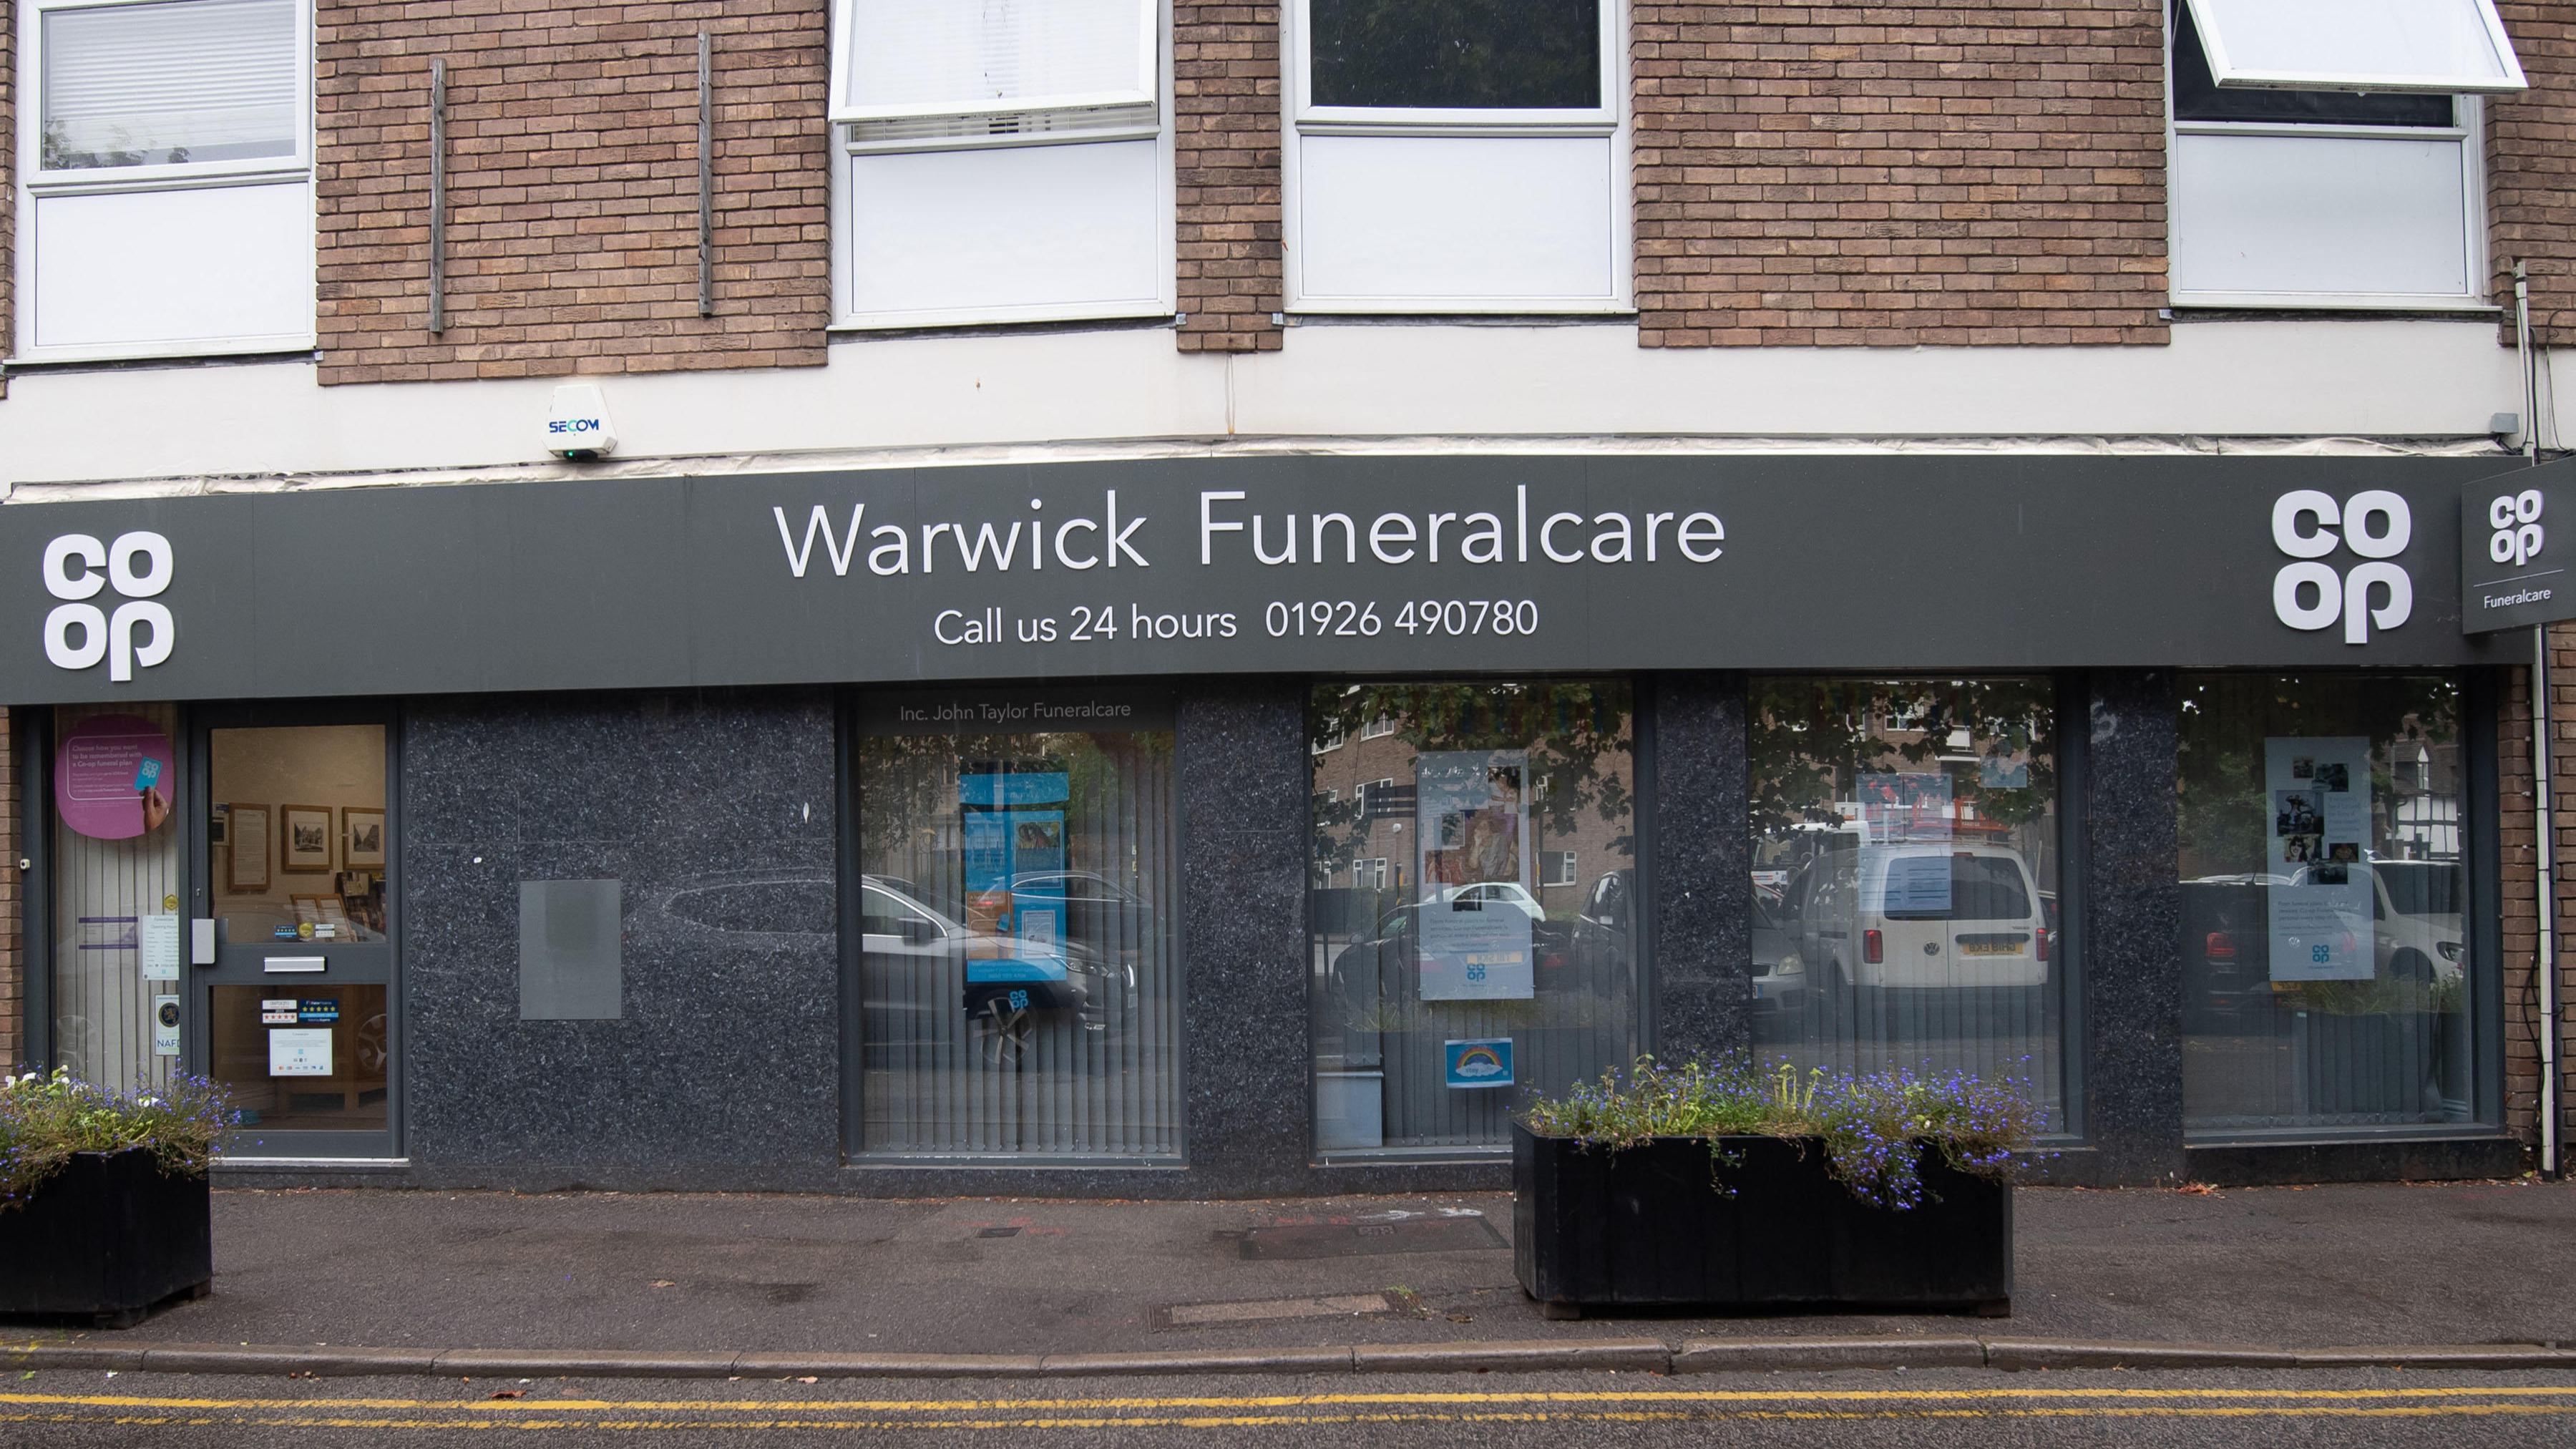 Images Warwick Funeralcare (inc John Taylor Funeralcare)